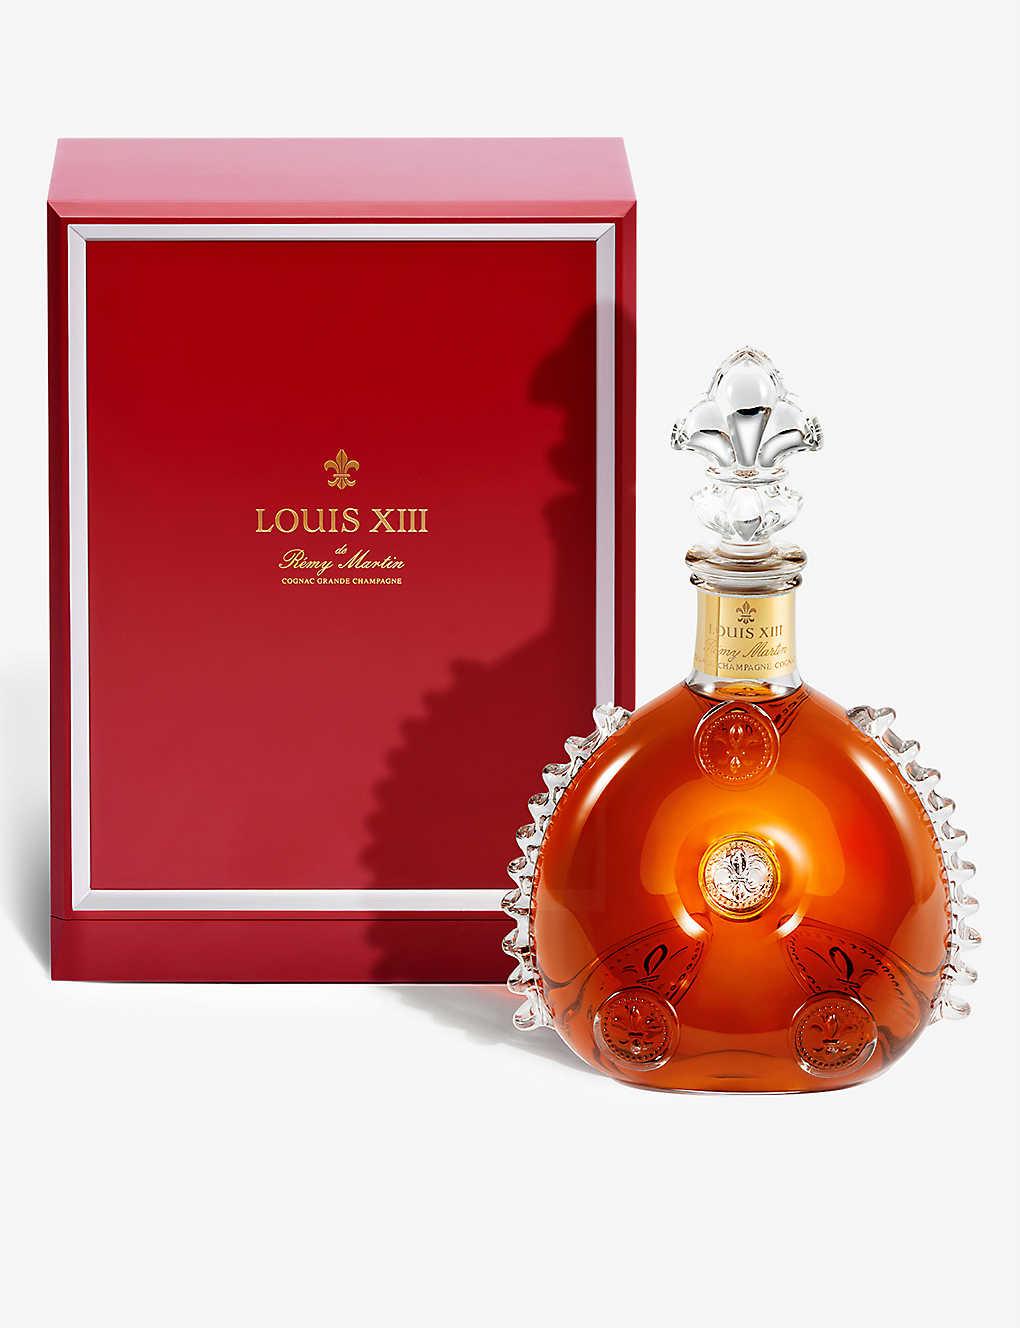 louis xiii cognac price philippines